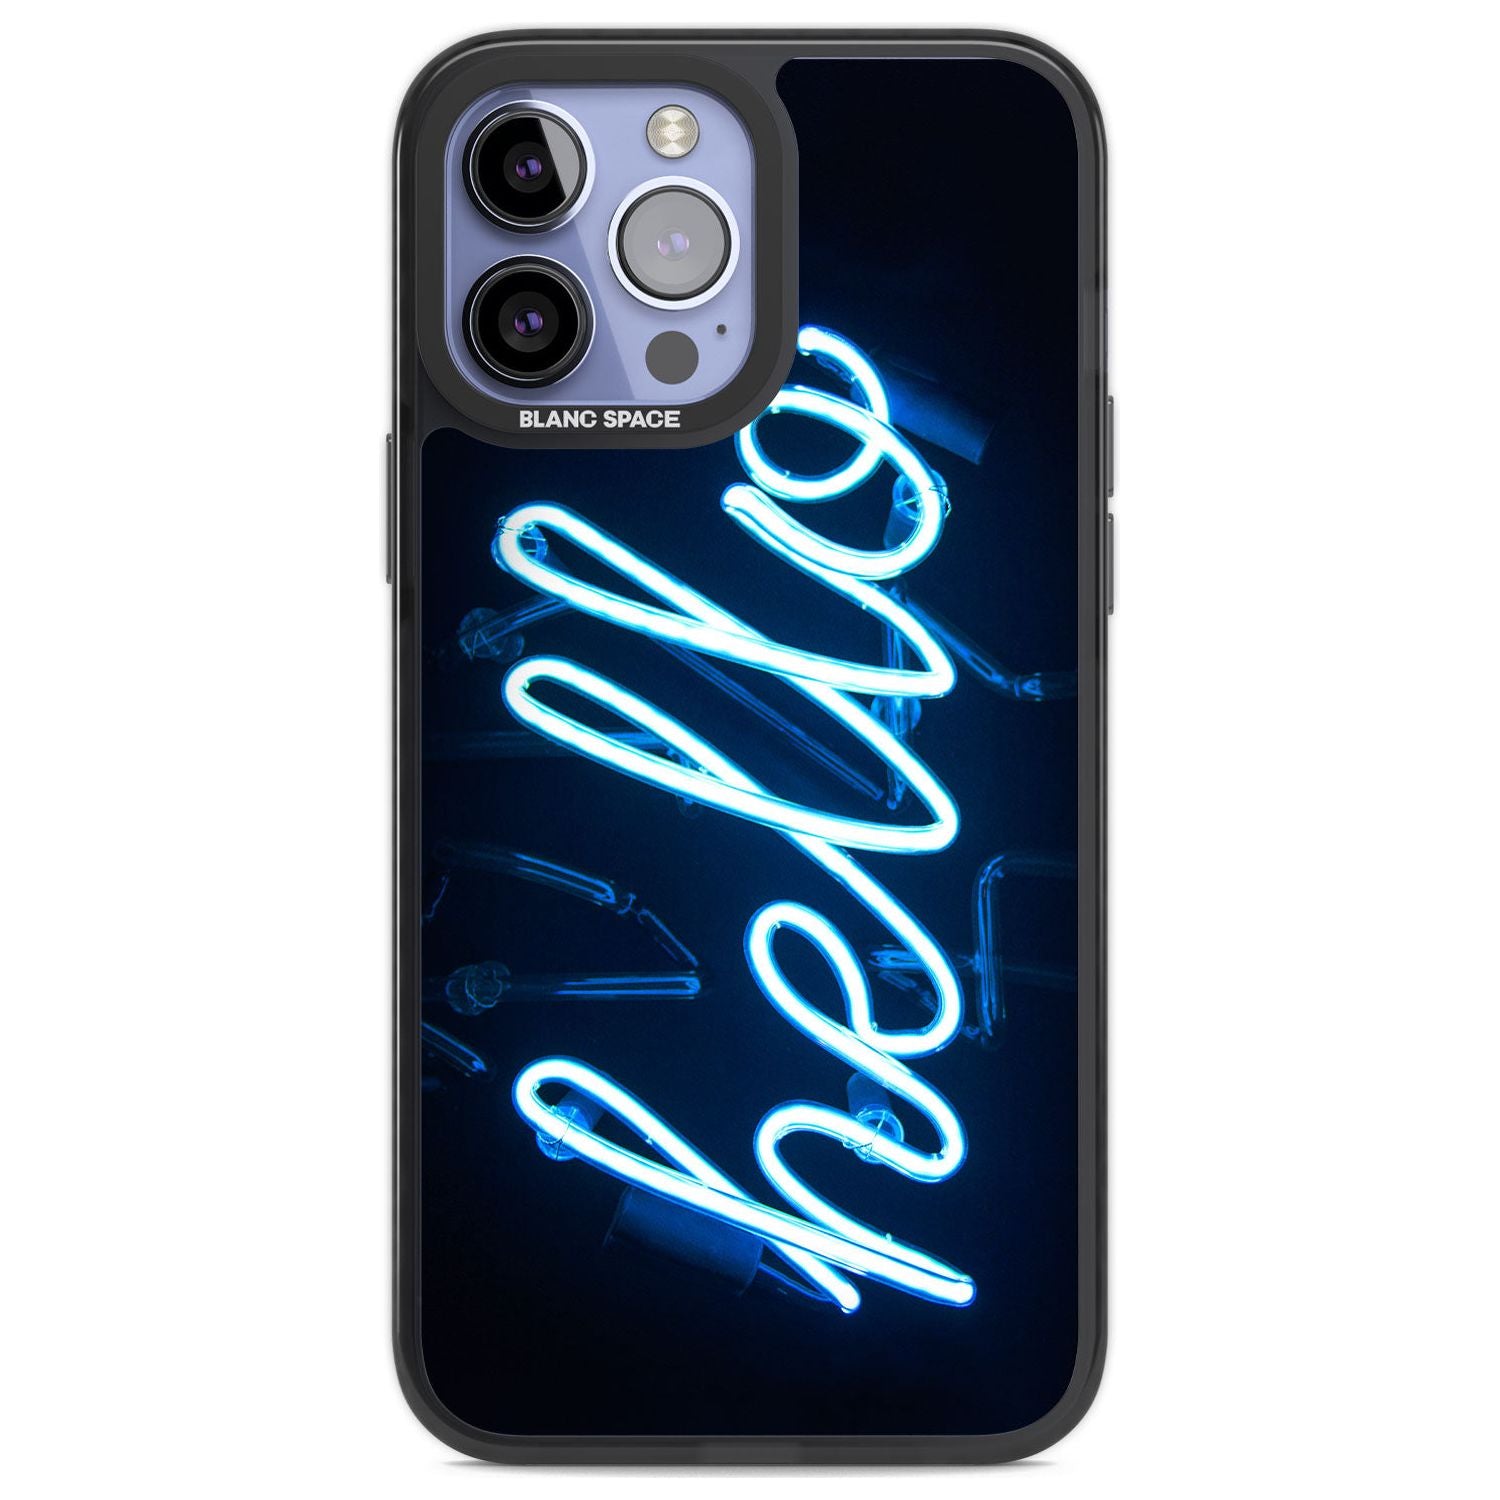 "Hello" Blue Cursive Neon Sign Phone Case iPhone 13 Pro Max / Black Impact Case,iPhone 14 Pro Max / Black Impact Case Blanc Space